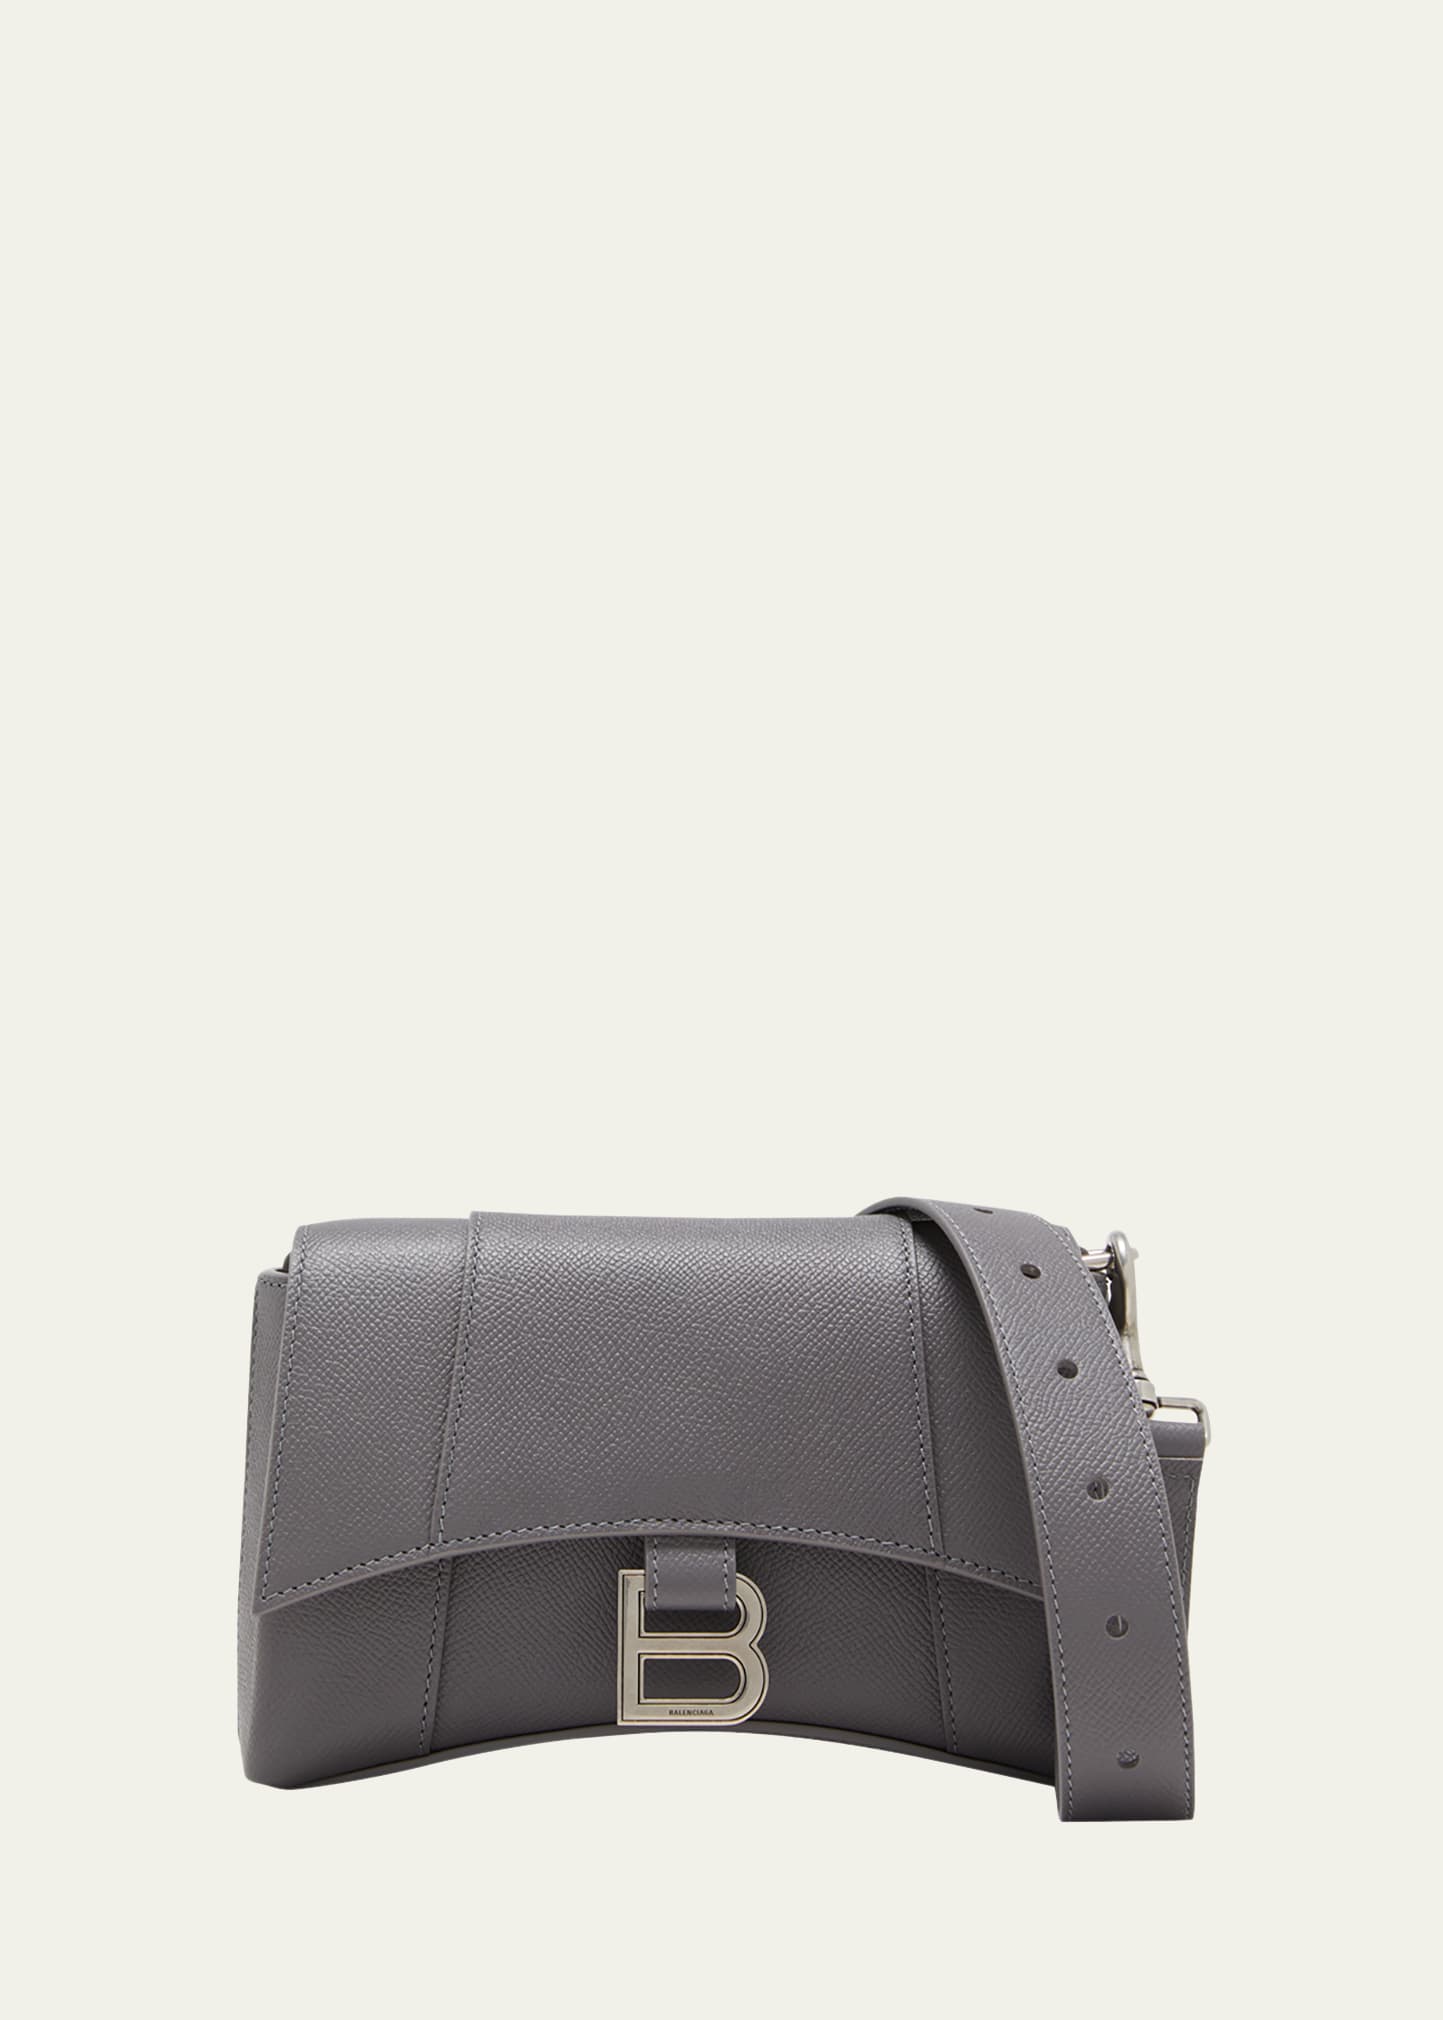 Balenciaga Men's Downtown B-logo Leather Crossbody Bag In Dark Grey